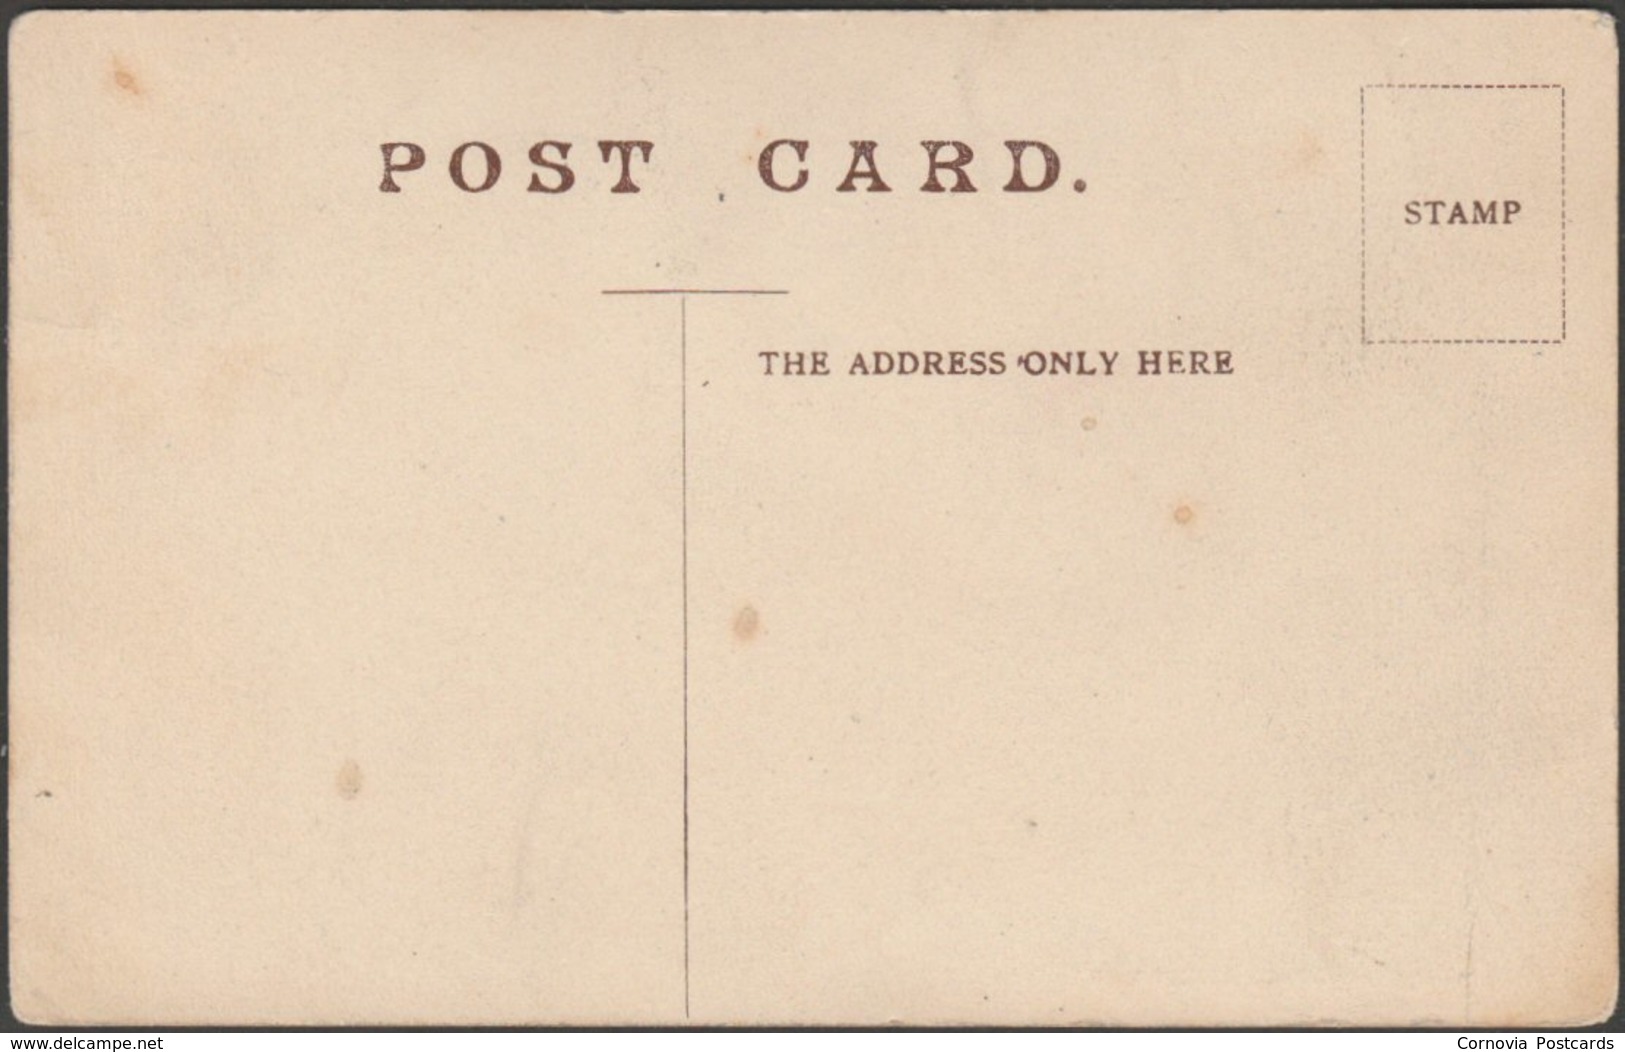 Glendarroch House, Kirkcowan, Wigtownshire, C.1920 - Postcard - Wigtownshire